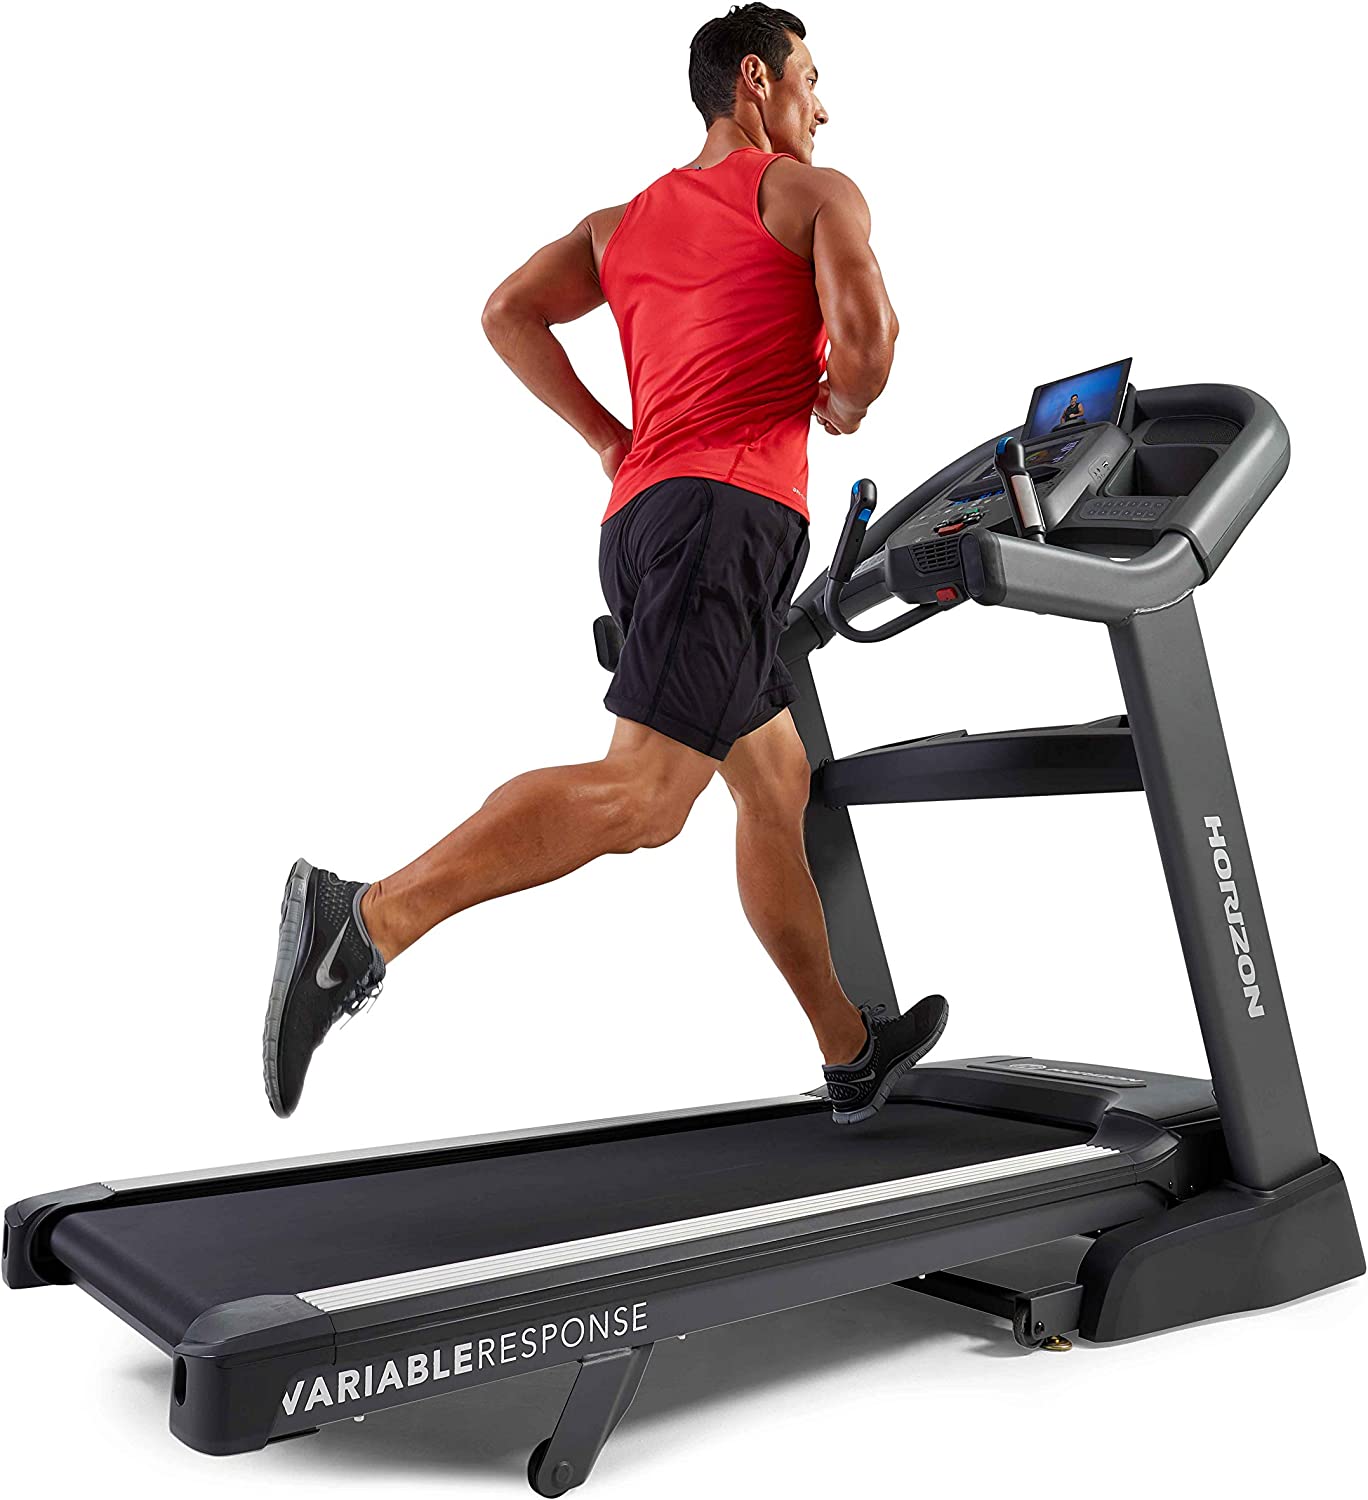 Horizon Fitness 7.8 Smart Treadmill